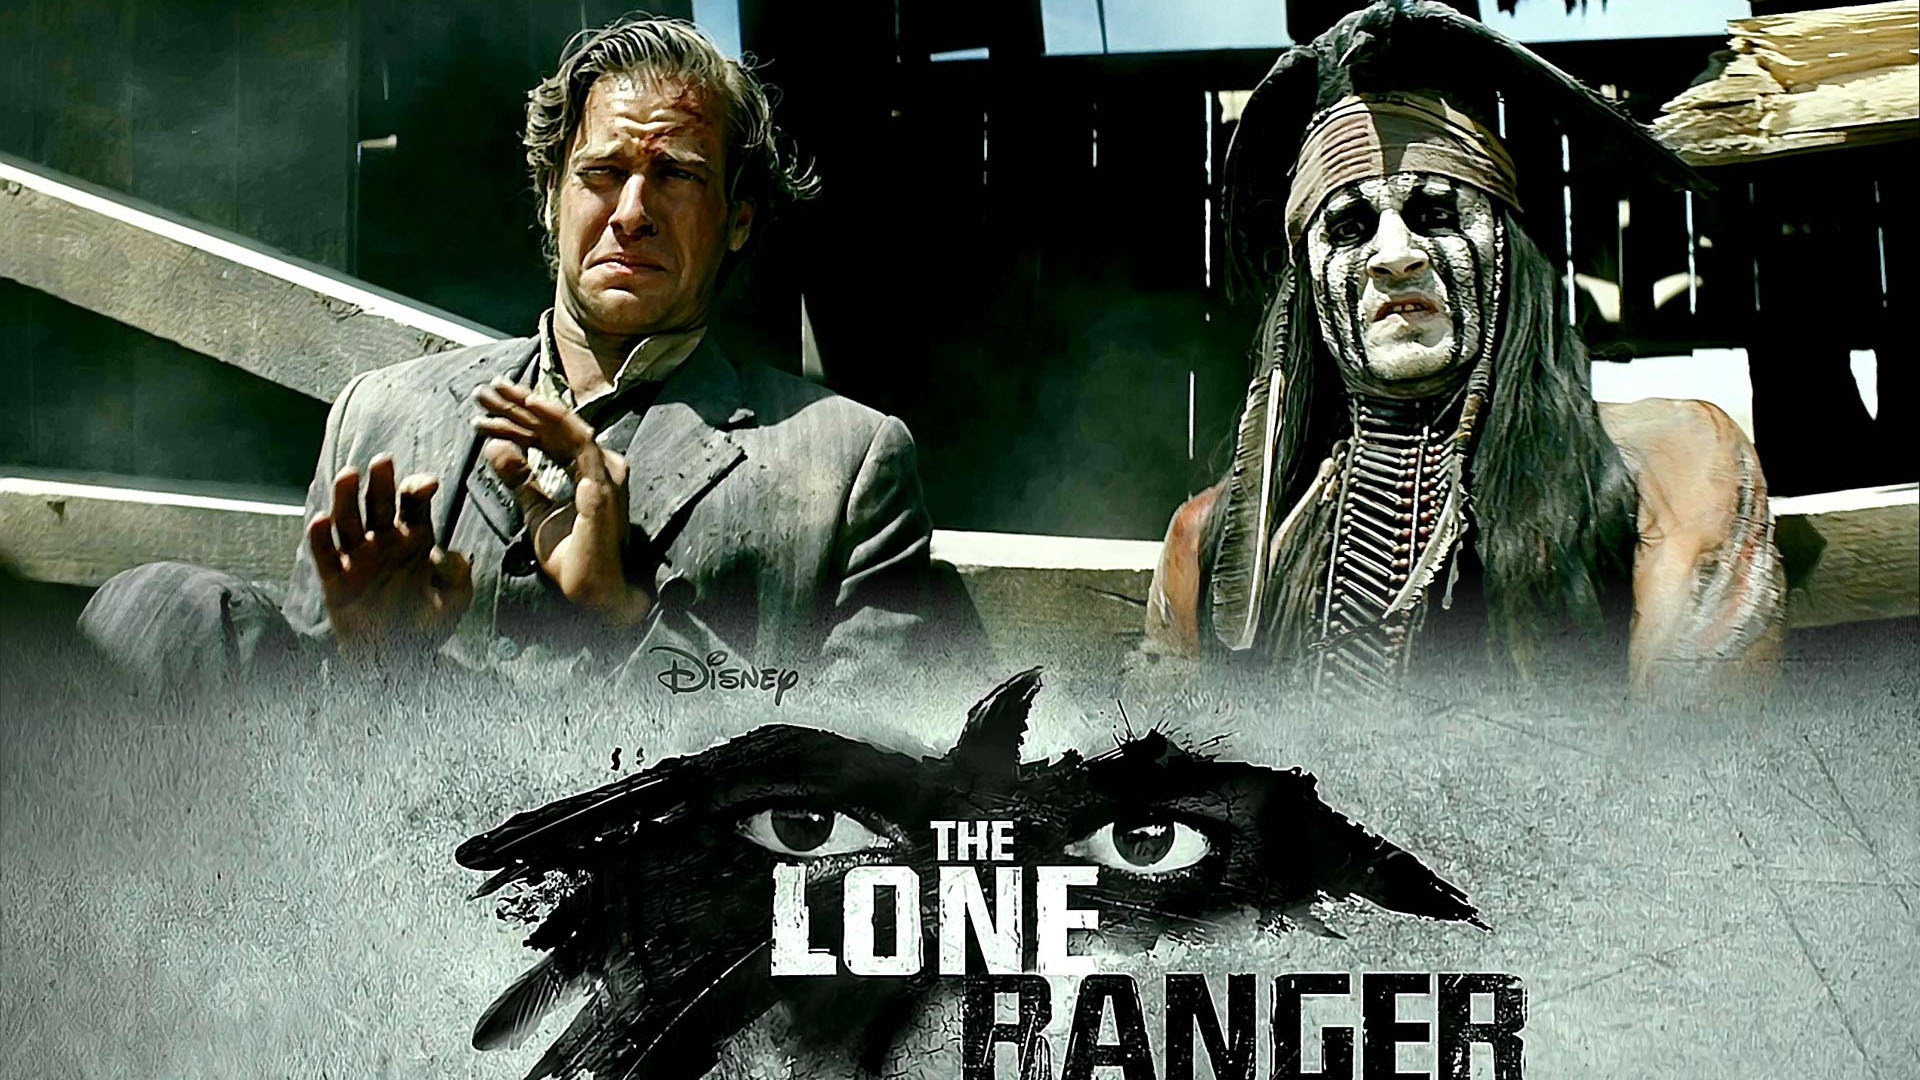 2013 The Lone Ranger for 1920 x 1080 HDTV 1080p resolution